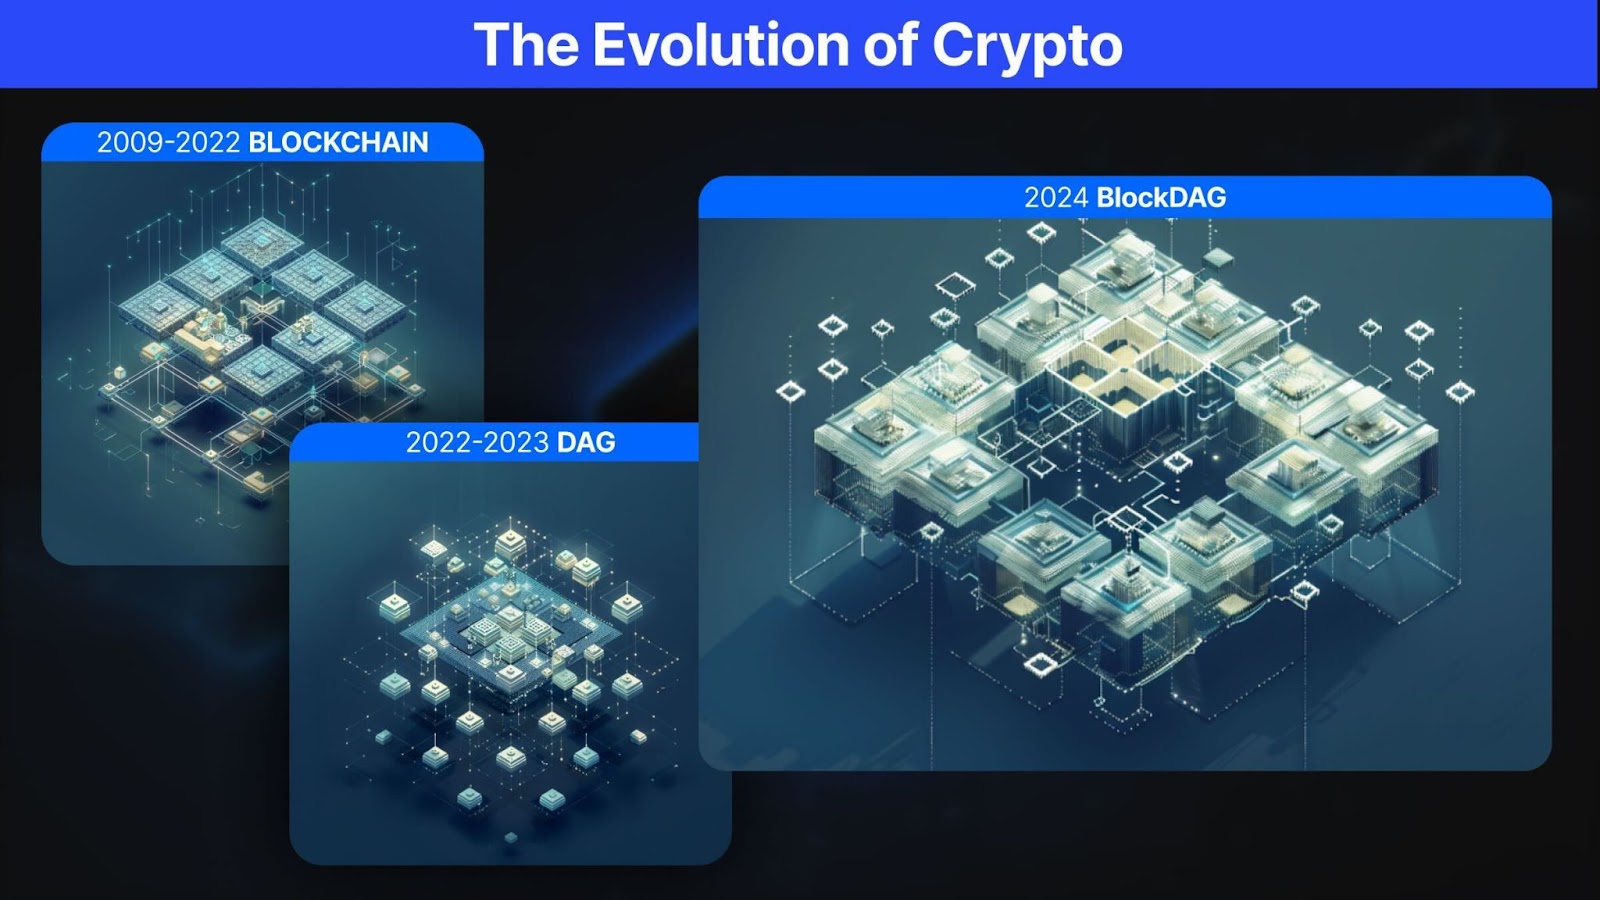 Evolution of cryptocurrencies